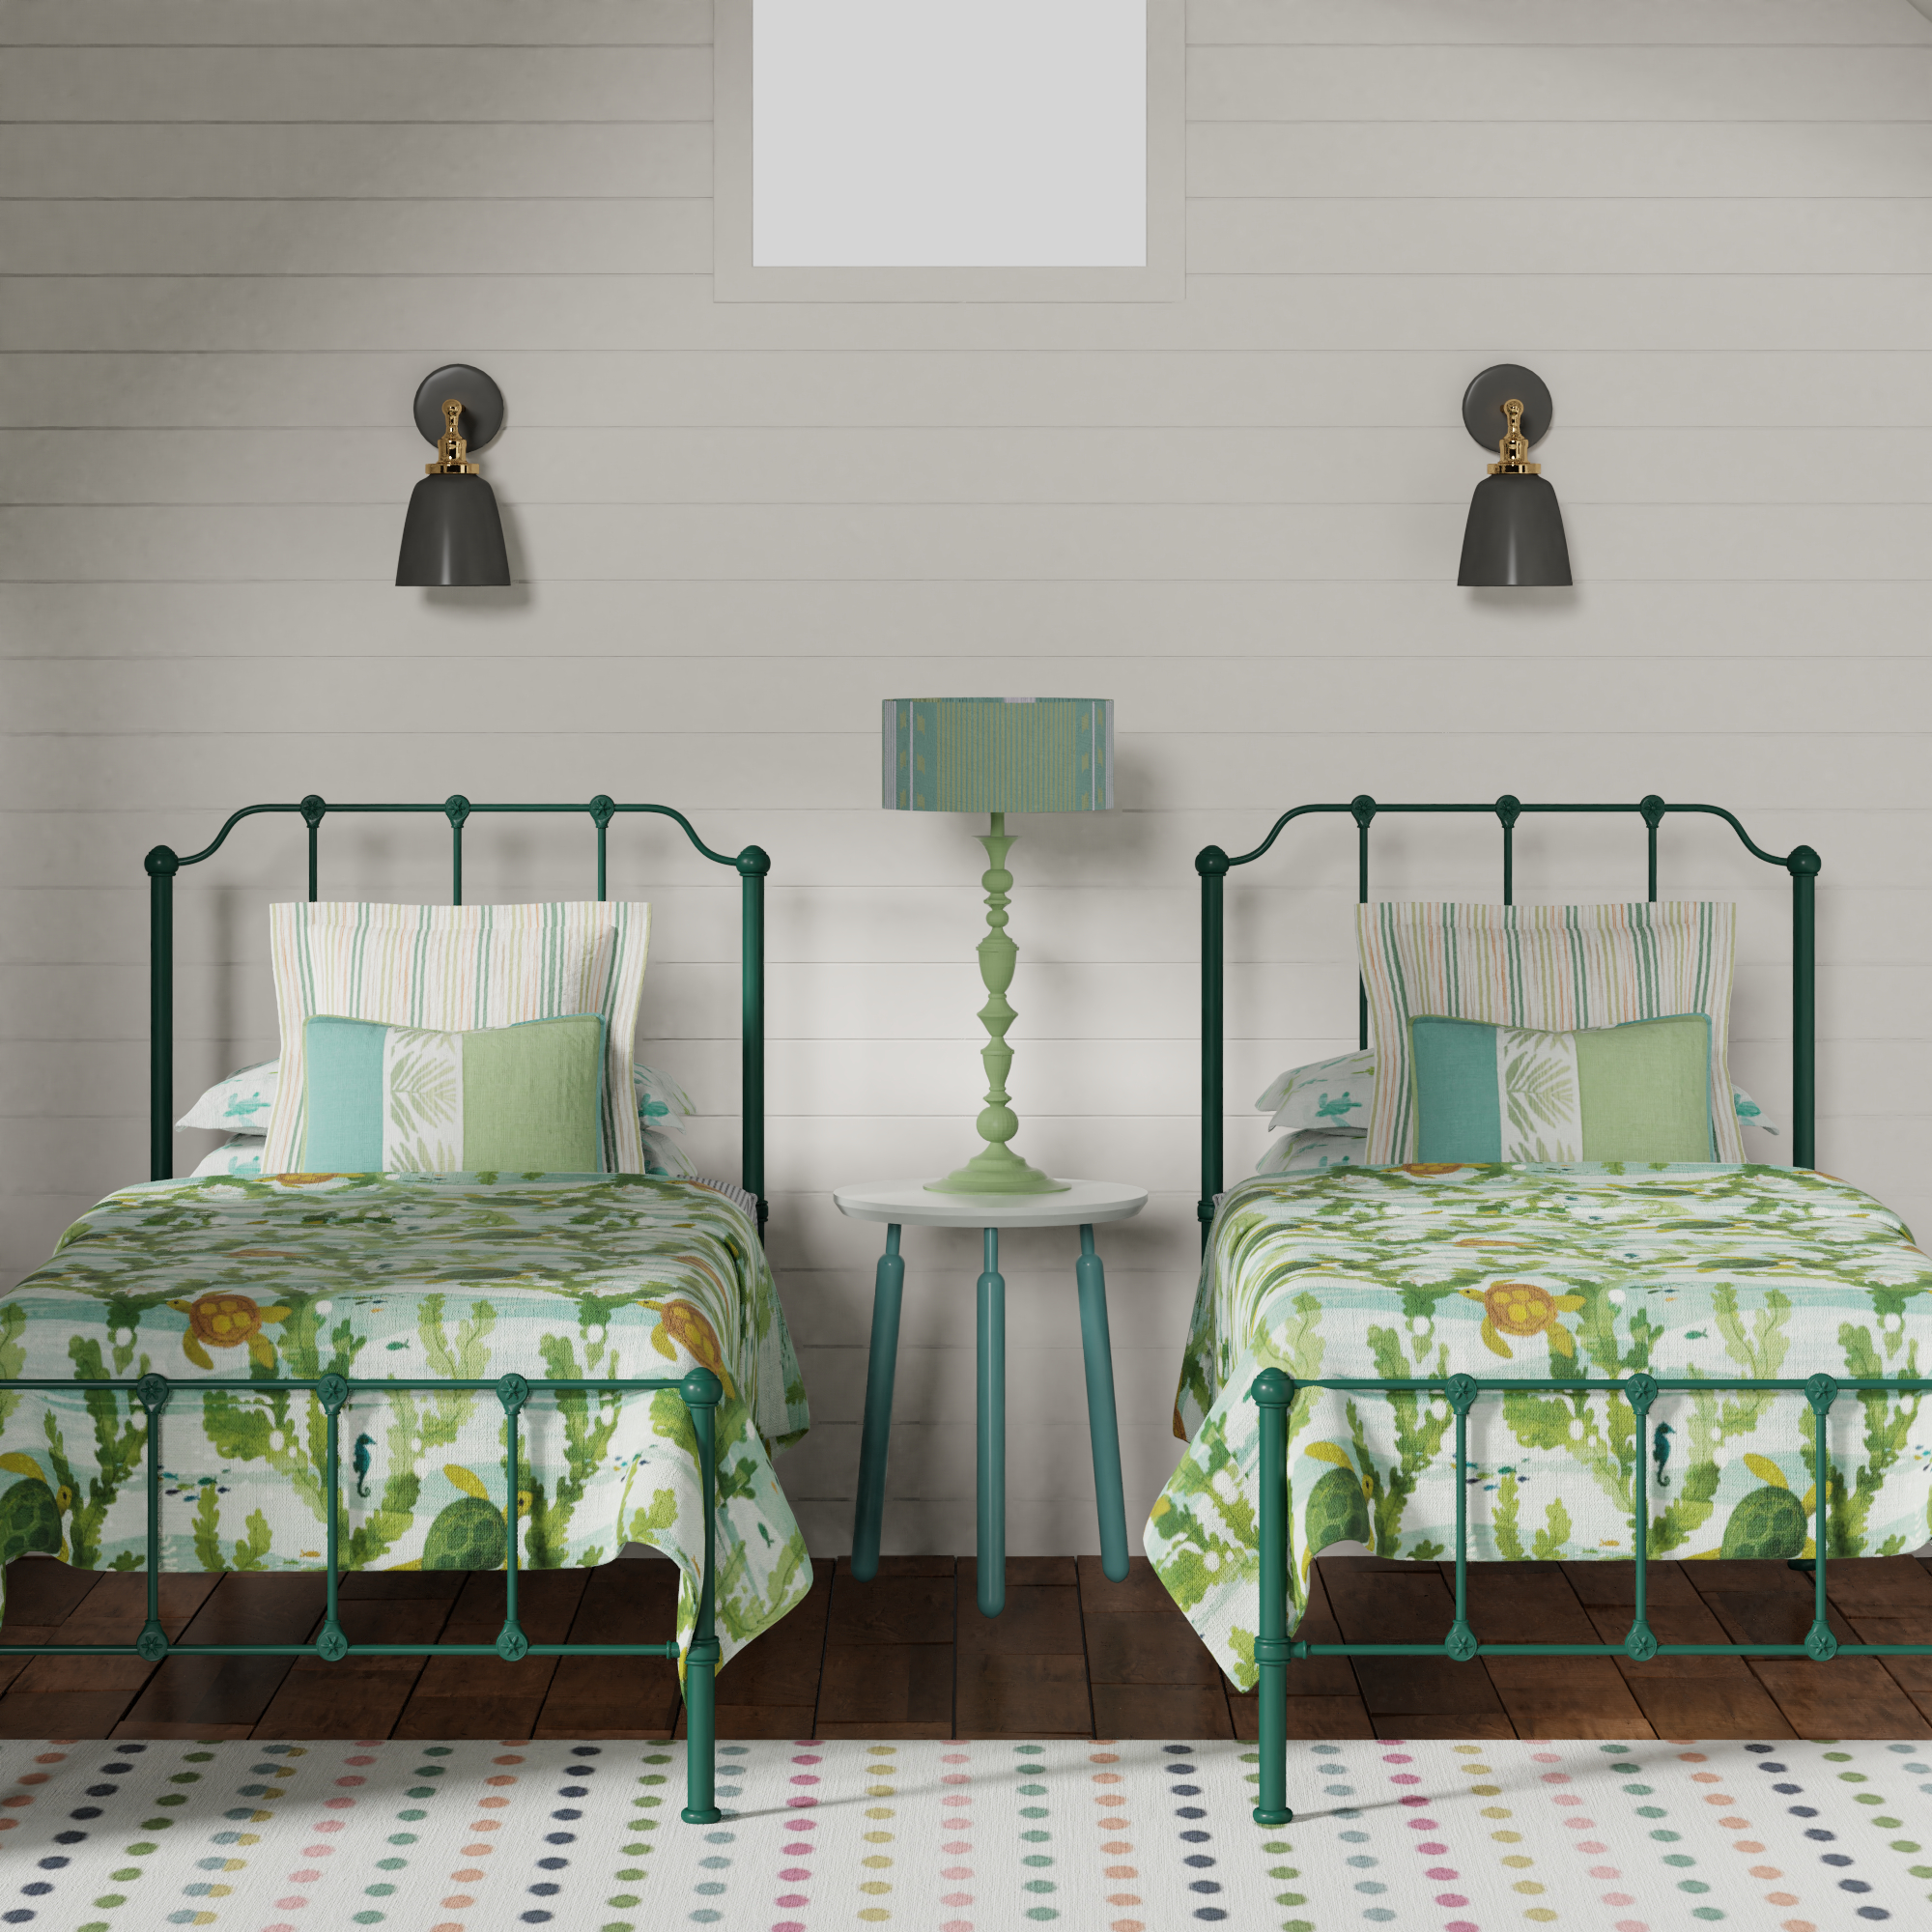 Julia iron bed - Image green